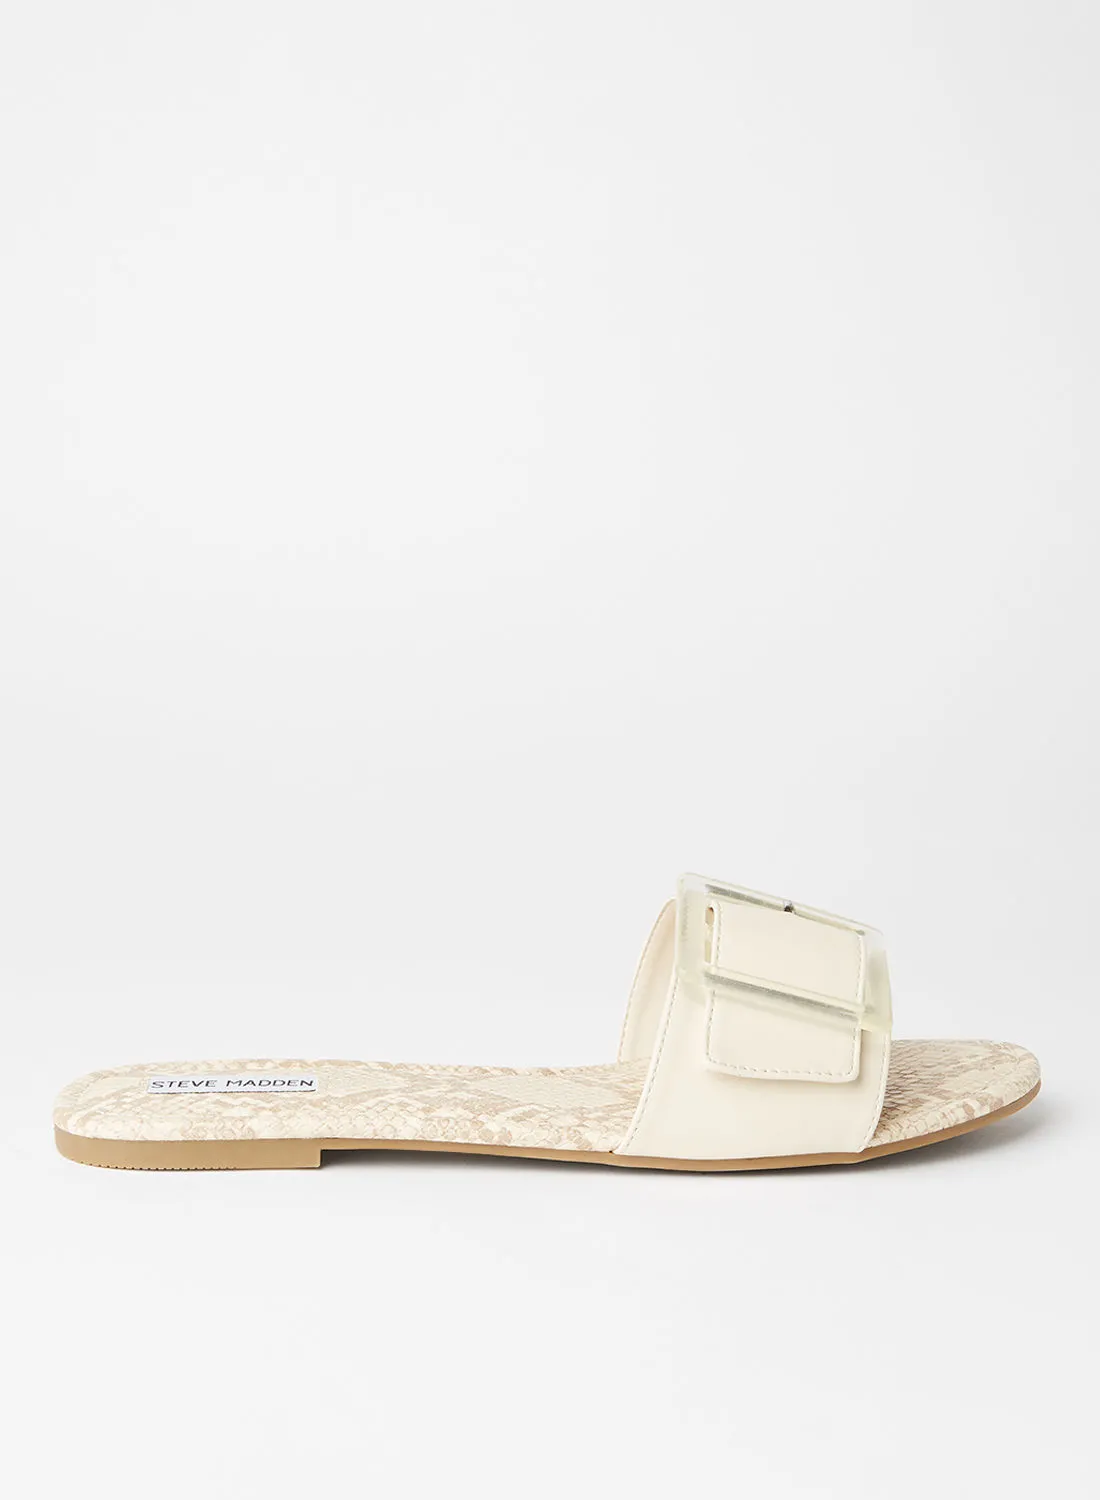 STEVE MADDEN Llola Flat Sandals White